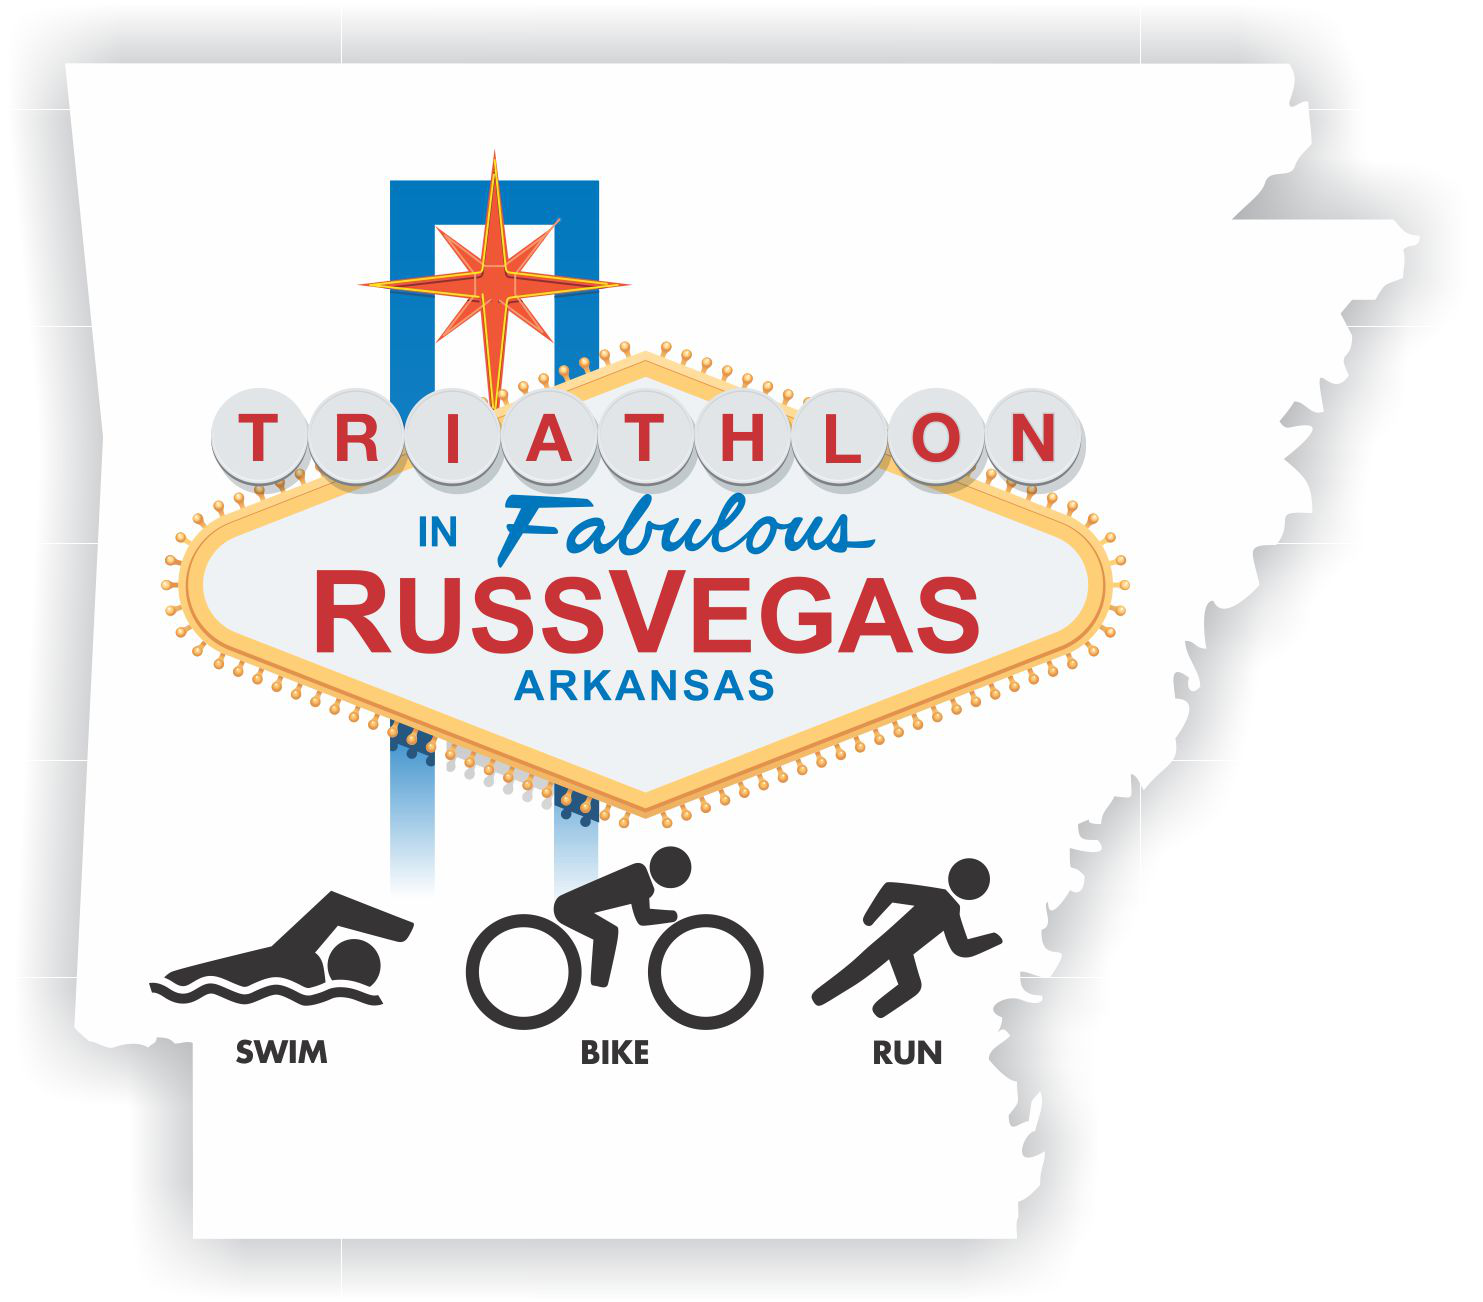 Russvegas Triathlon logo